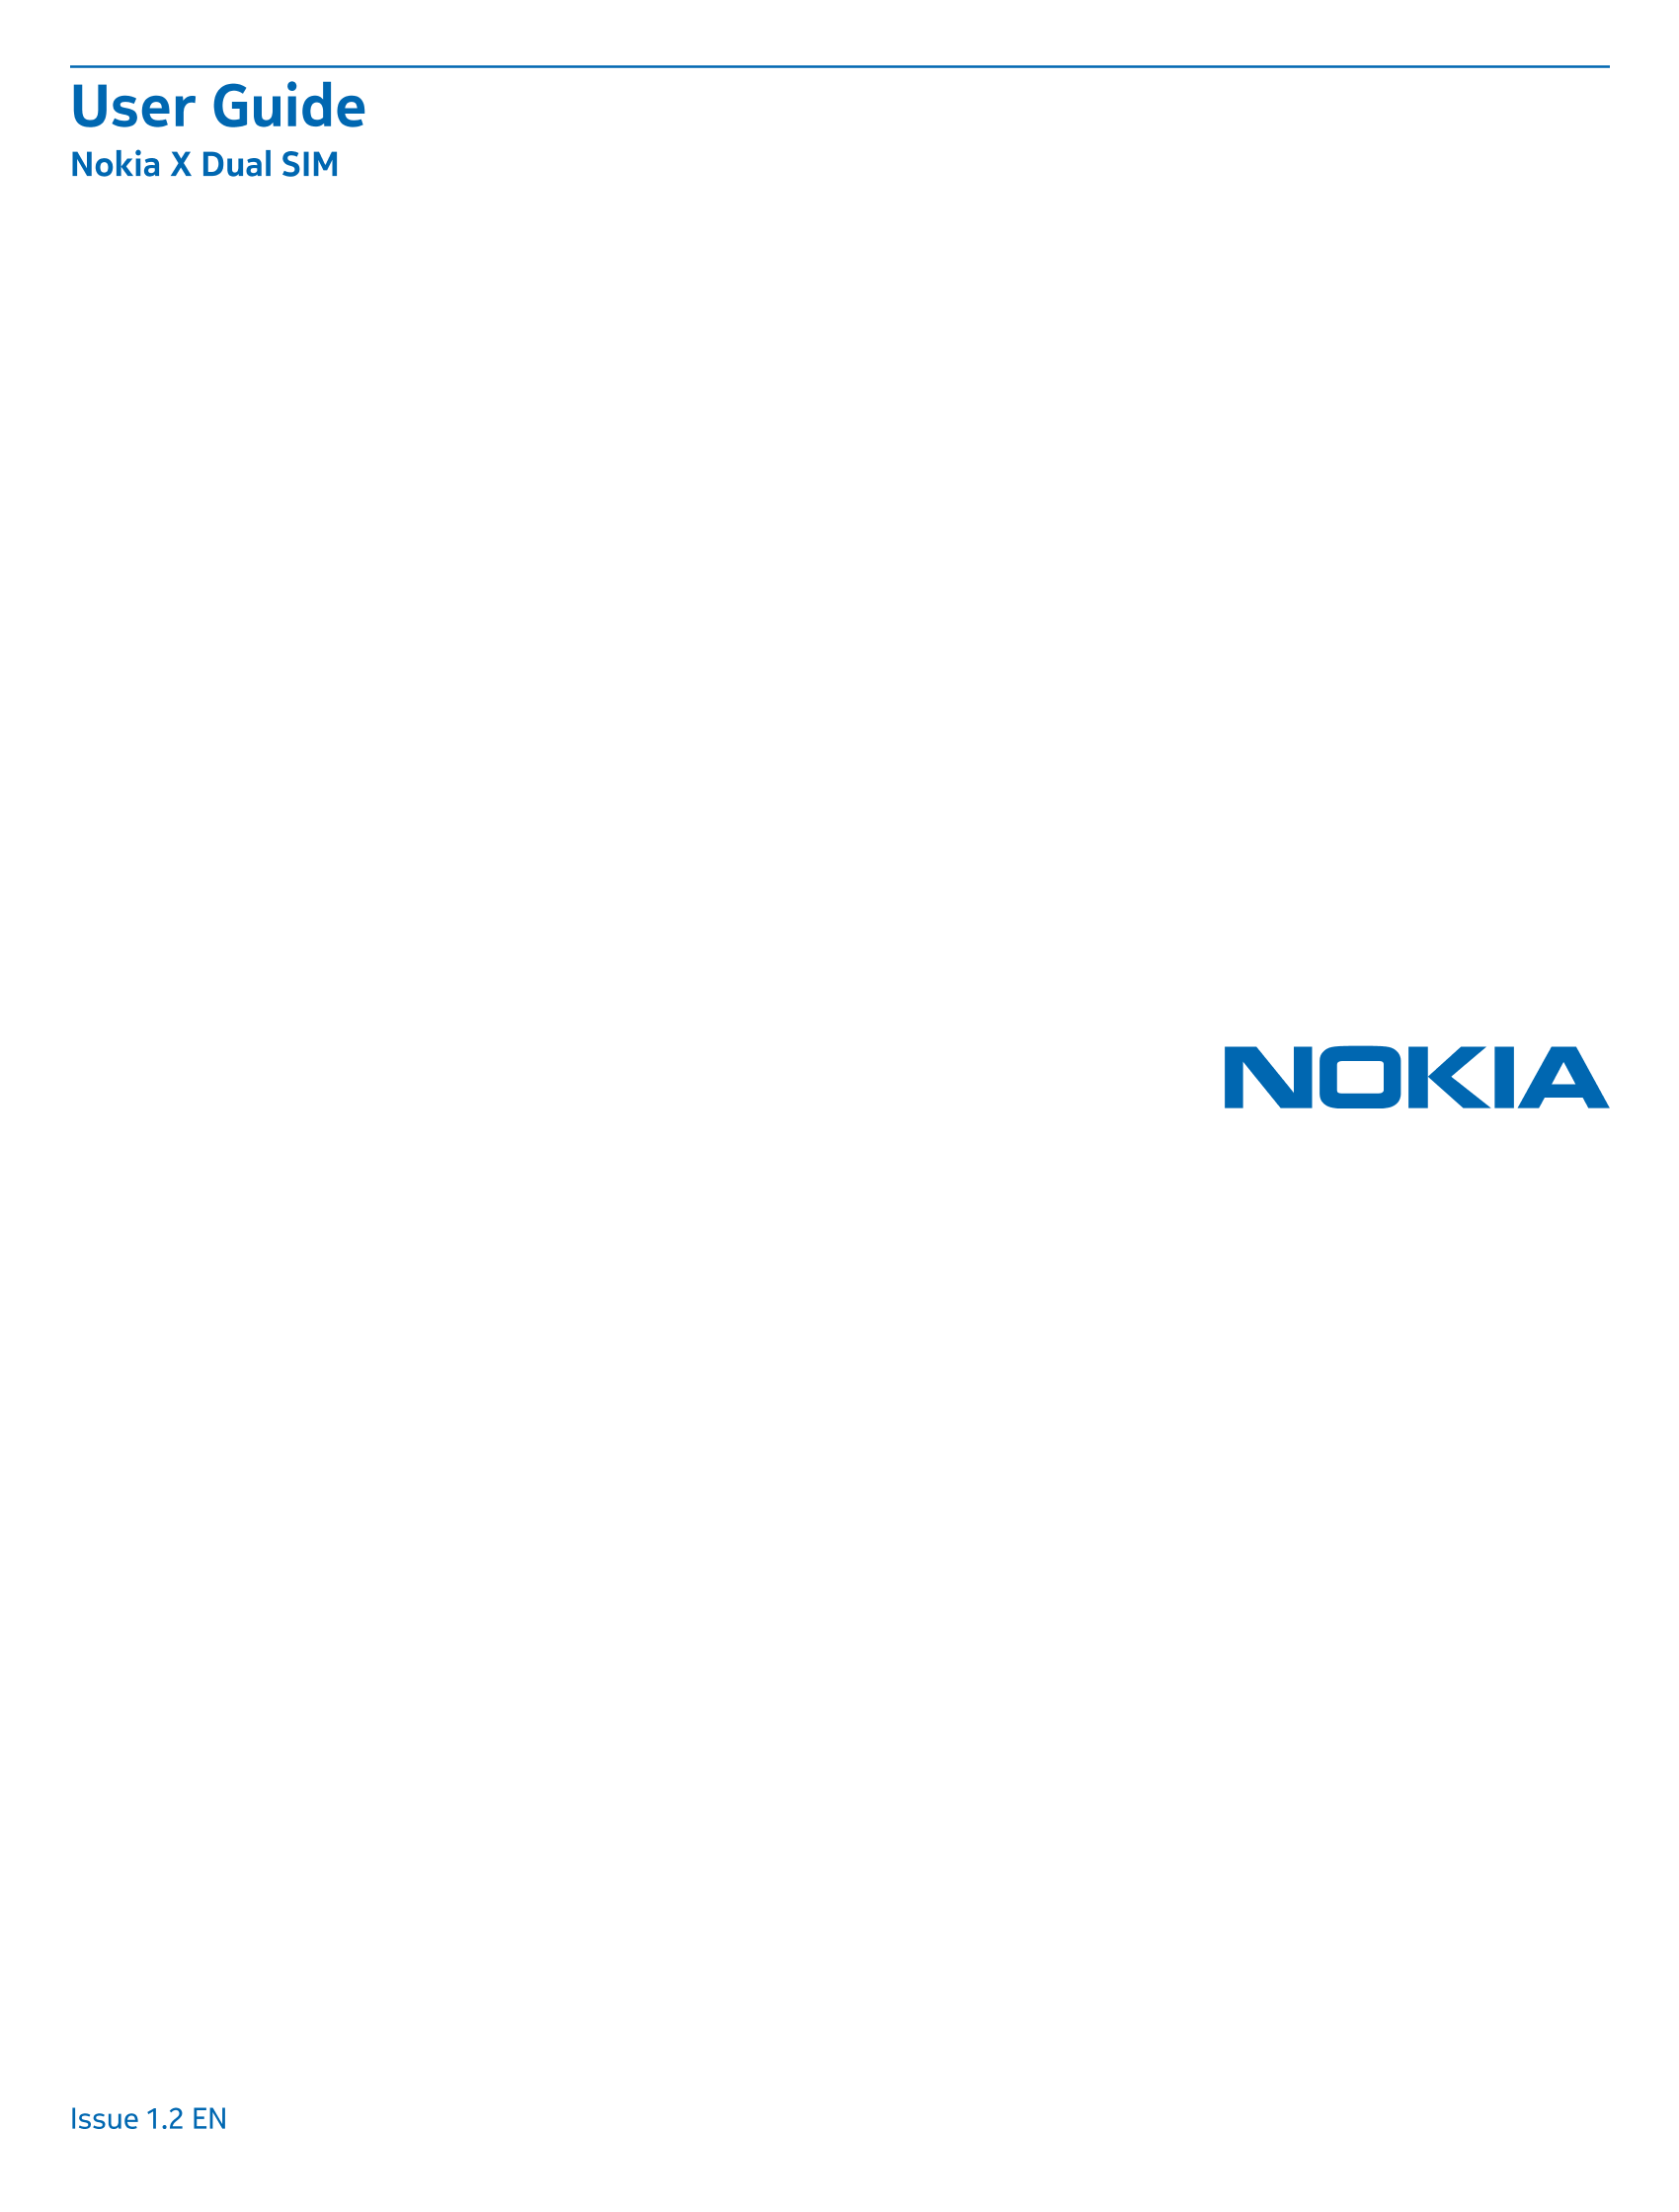 User Guide
Nokia X Dual SIM
Issue 1.2 EN